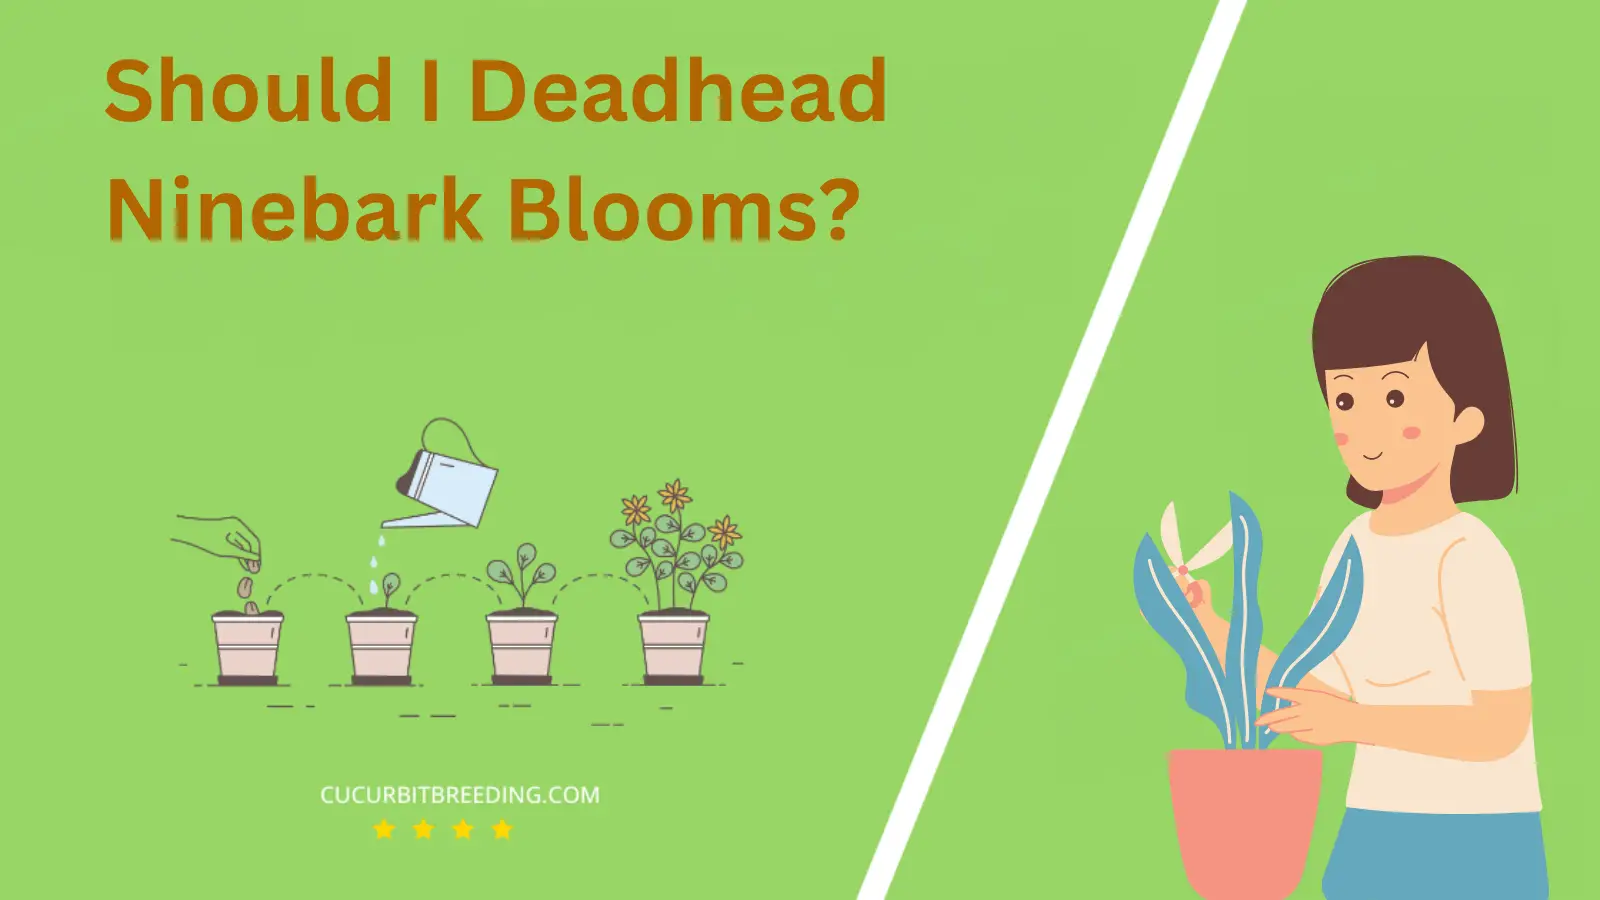 Should I Deadhead Ninebark Blooms?